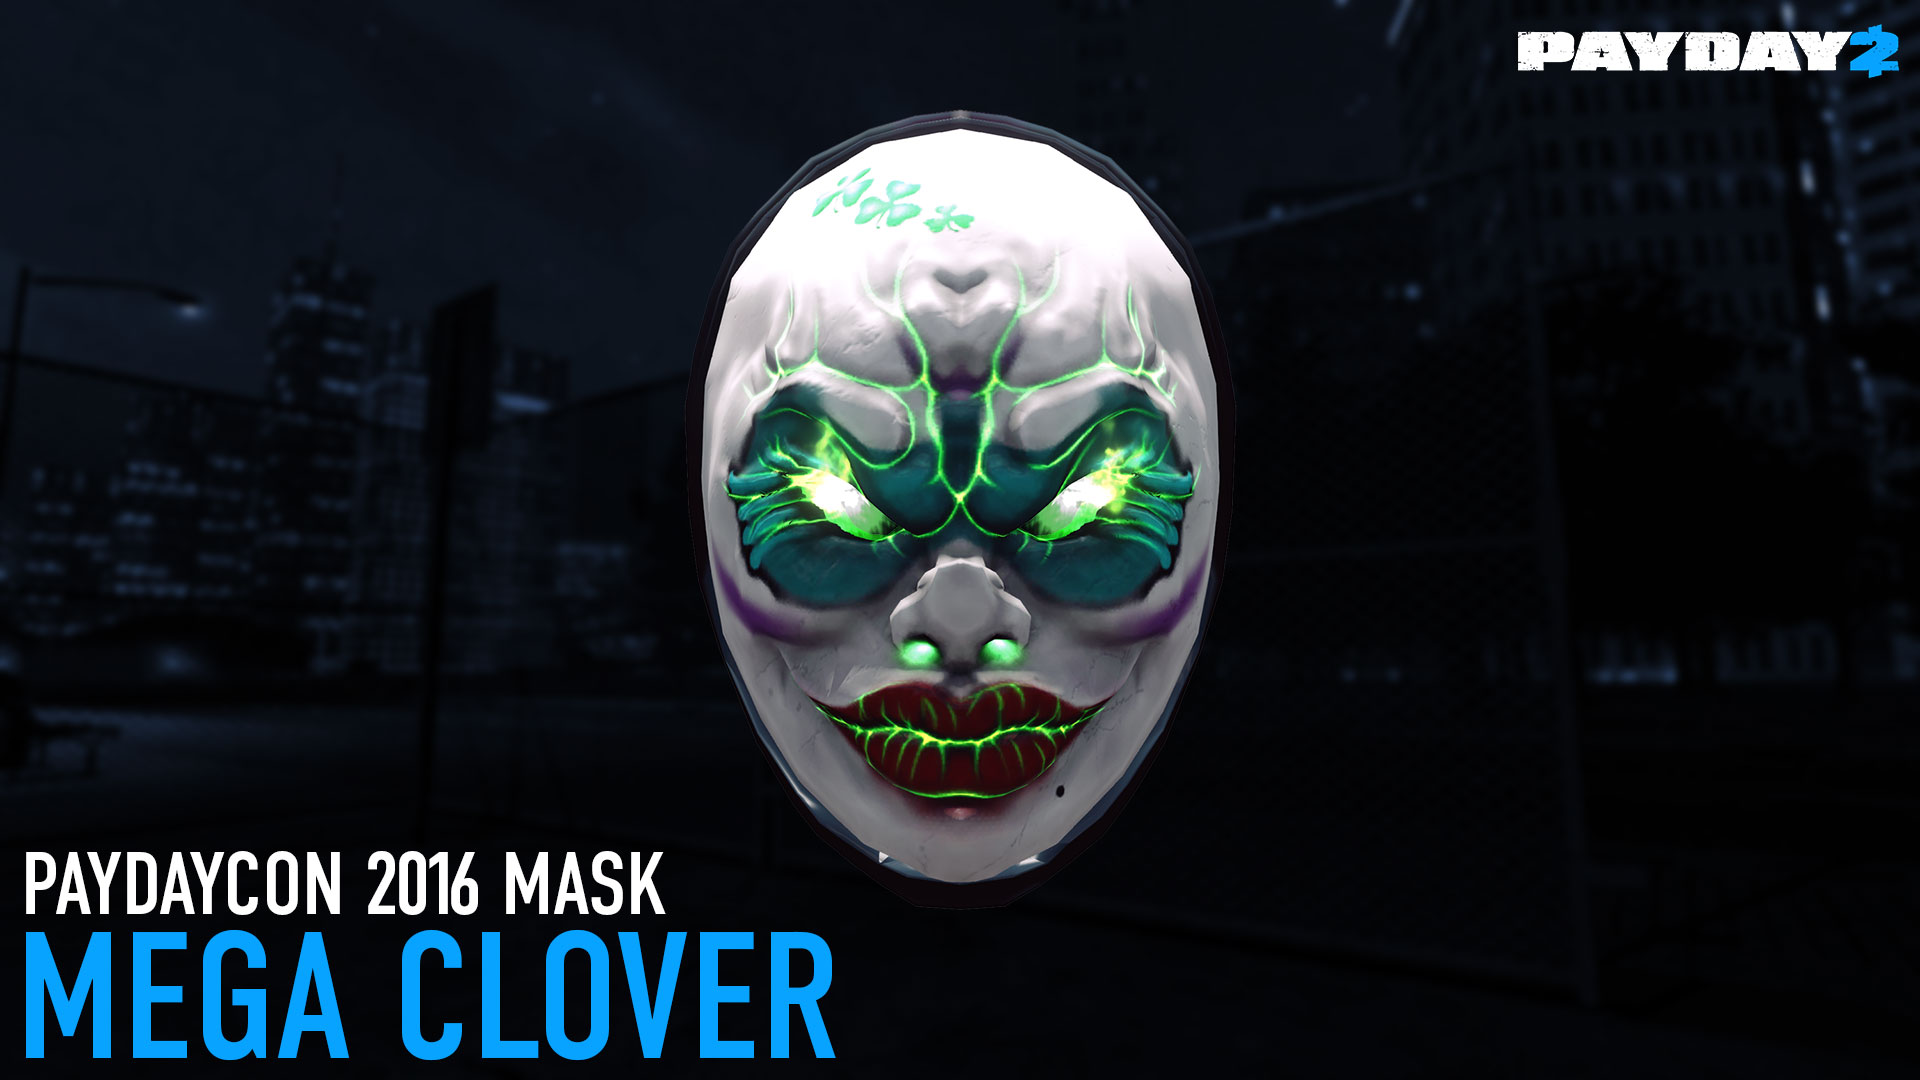 PAYDAY 2 - Mega Clover Mask (PAYDAYCON 2016) DLC Steam CD Key 5.64 USD